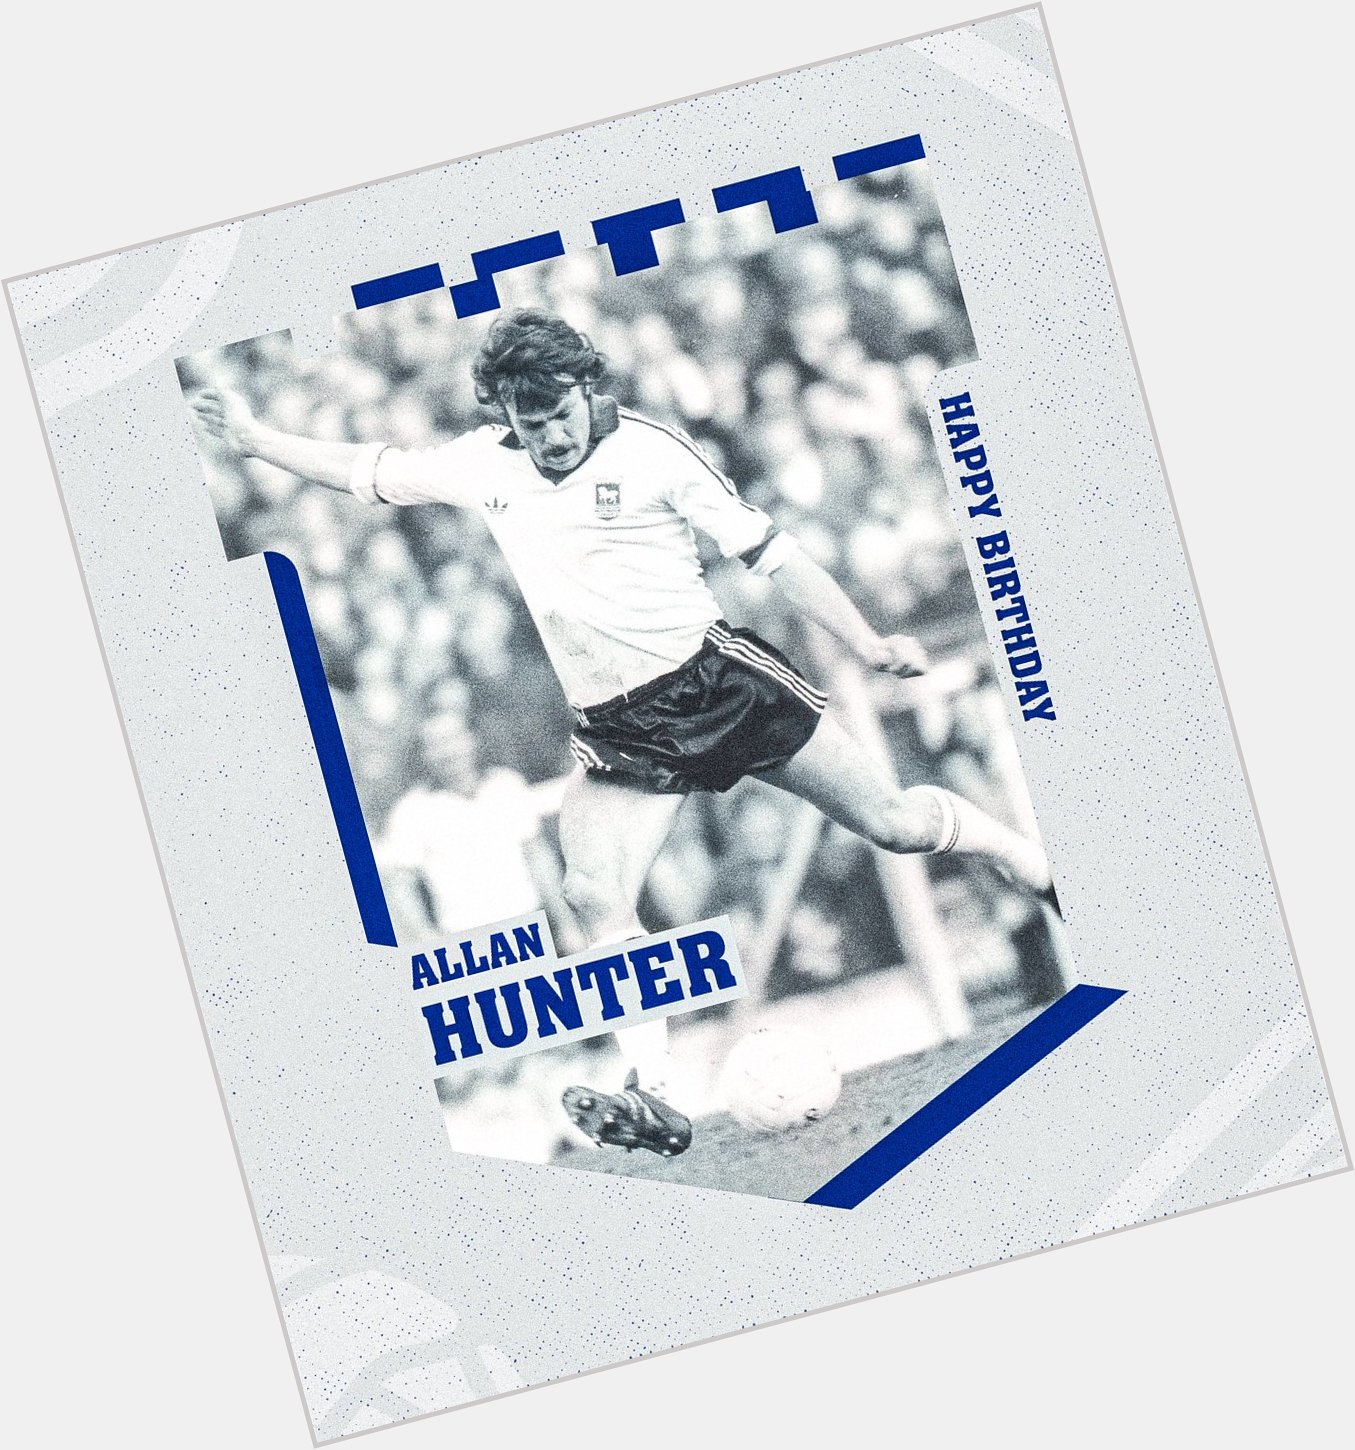  Happy 77th birthday, Allan Hunter. 